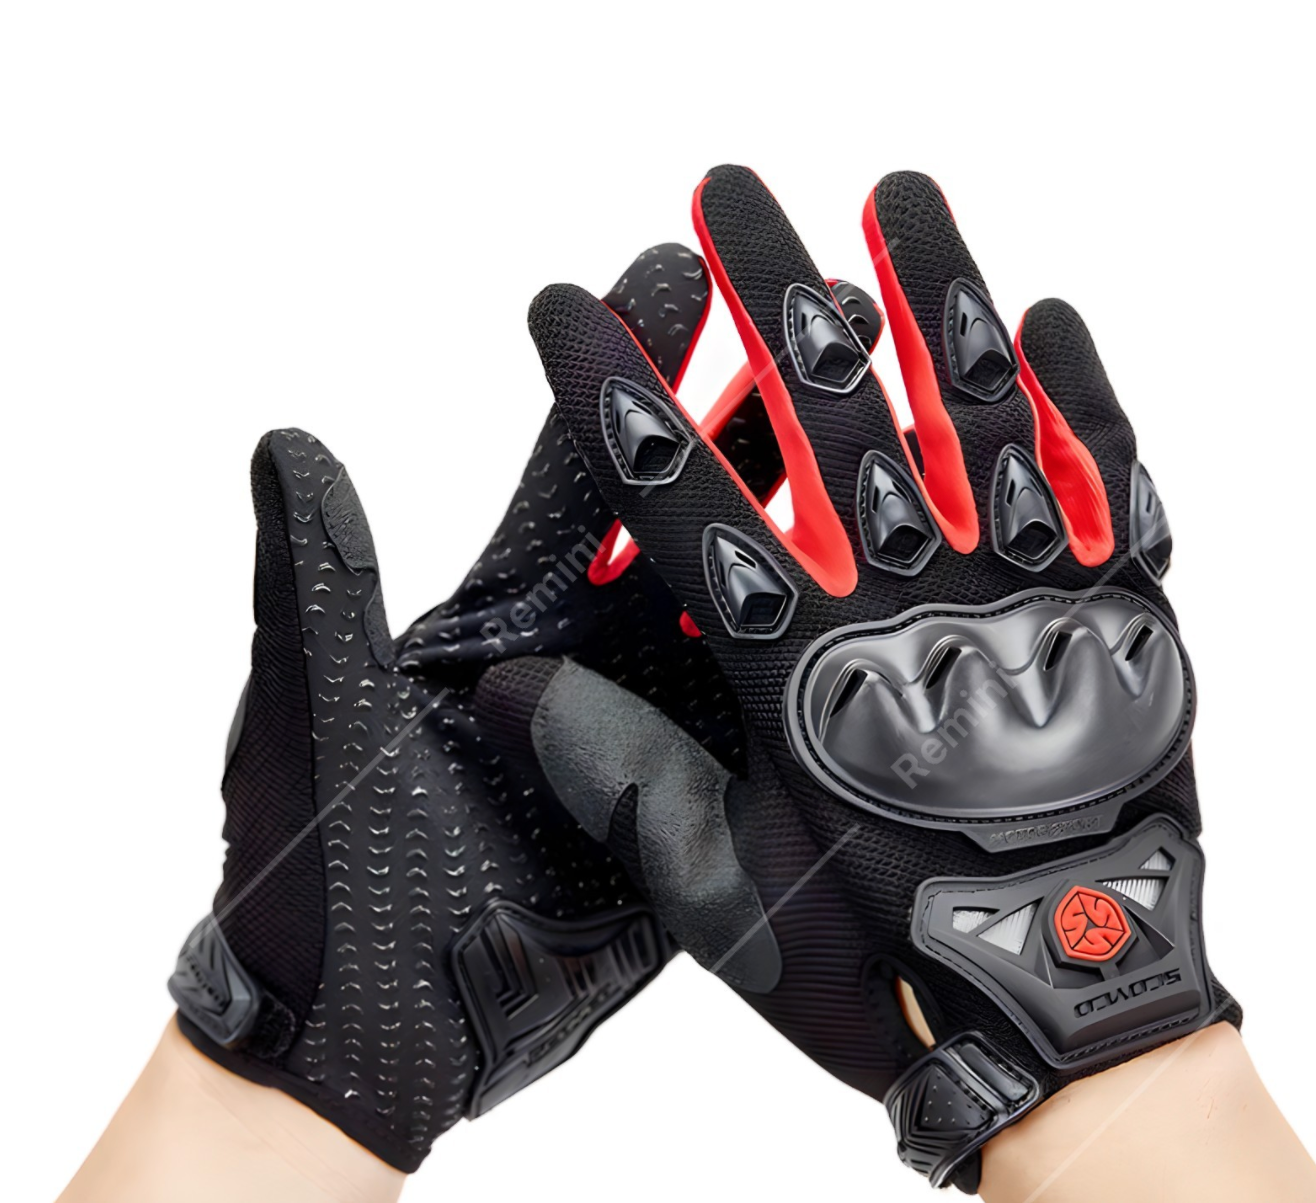 Scoyco MC29 Gloves Motorcycle Full Finger Guantes Motocross Racing MX Motorbike Motocicleta Bike Cycling Gloves